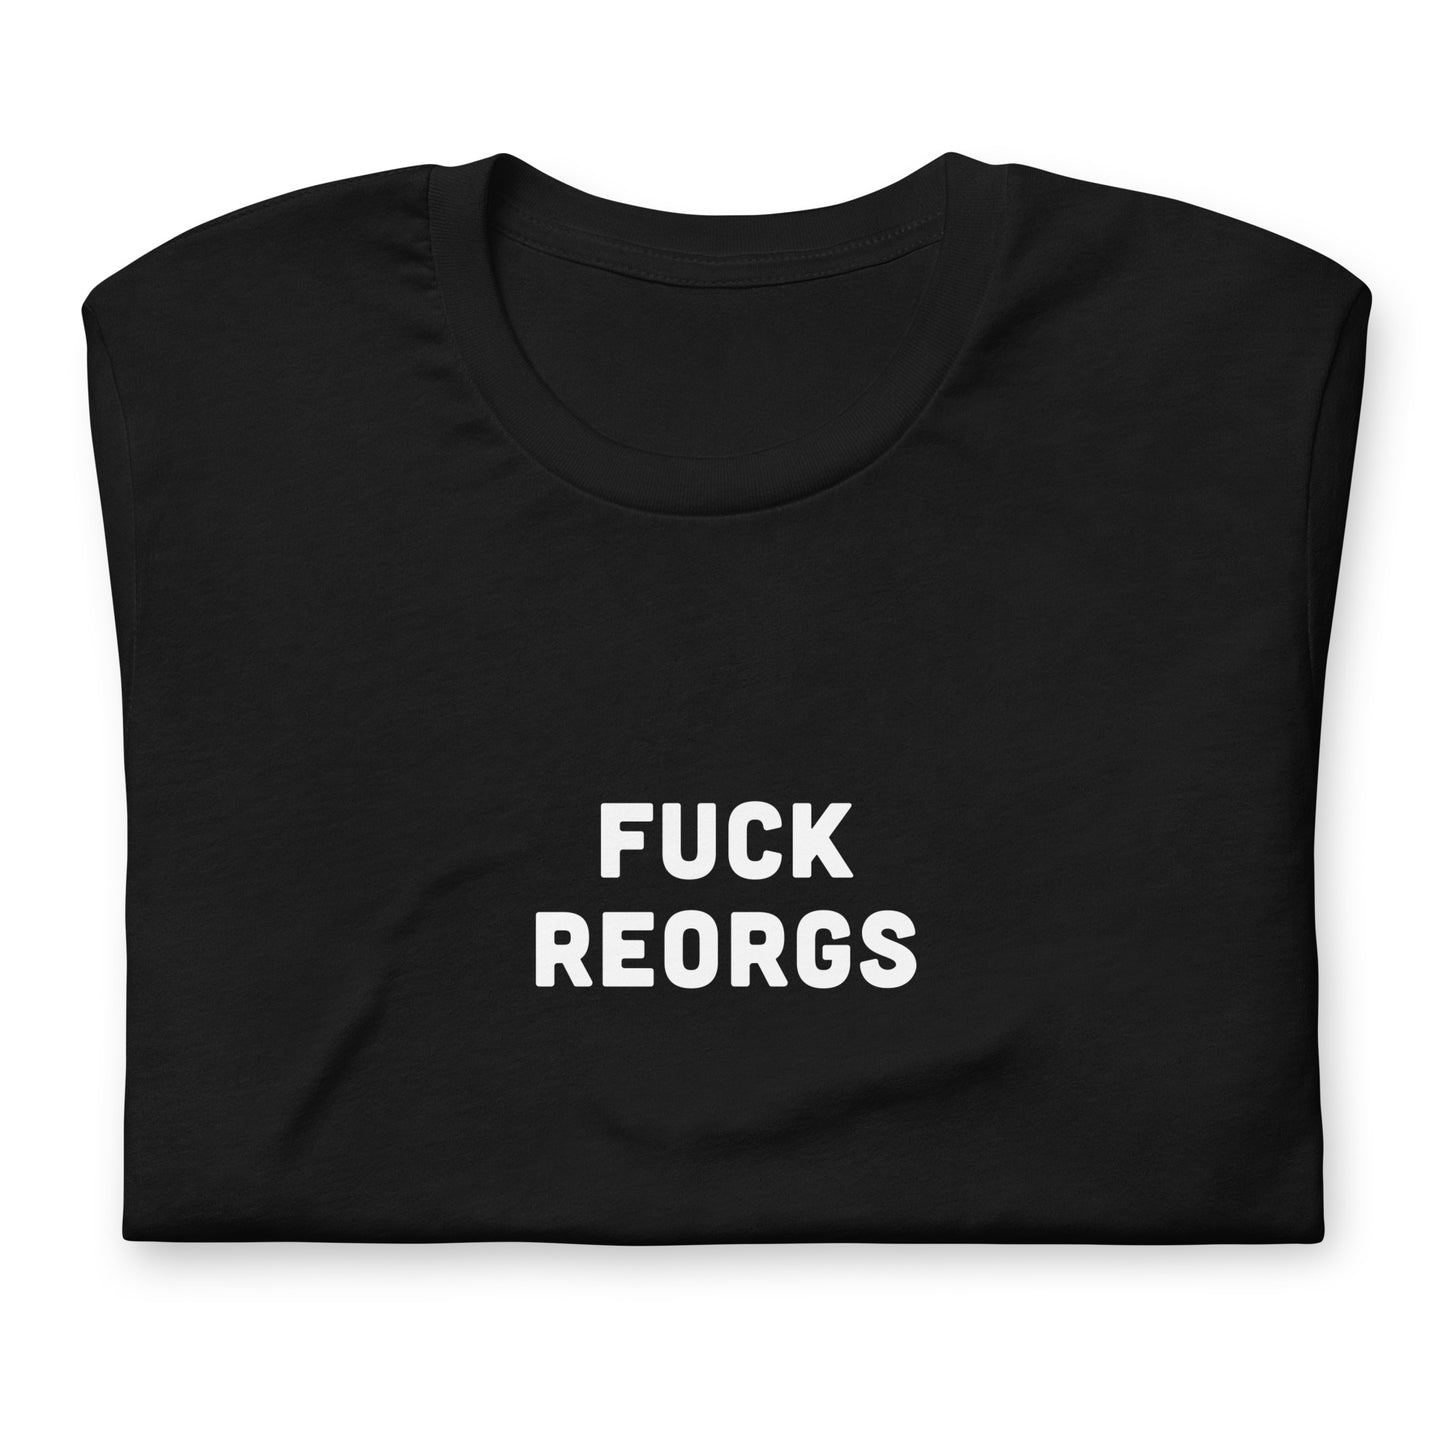 Fuck Reorgs T-Shirt Size M Color Black